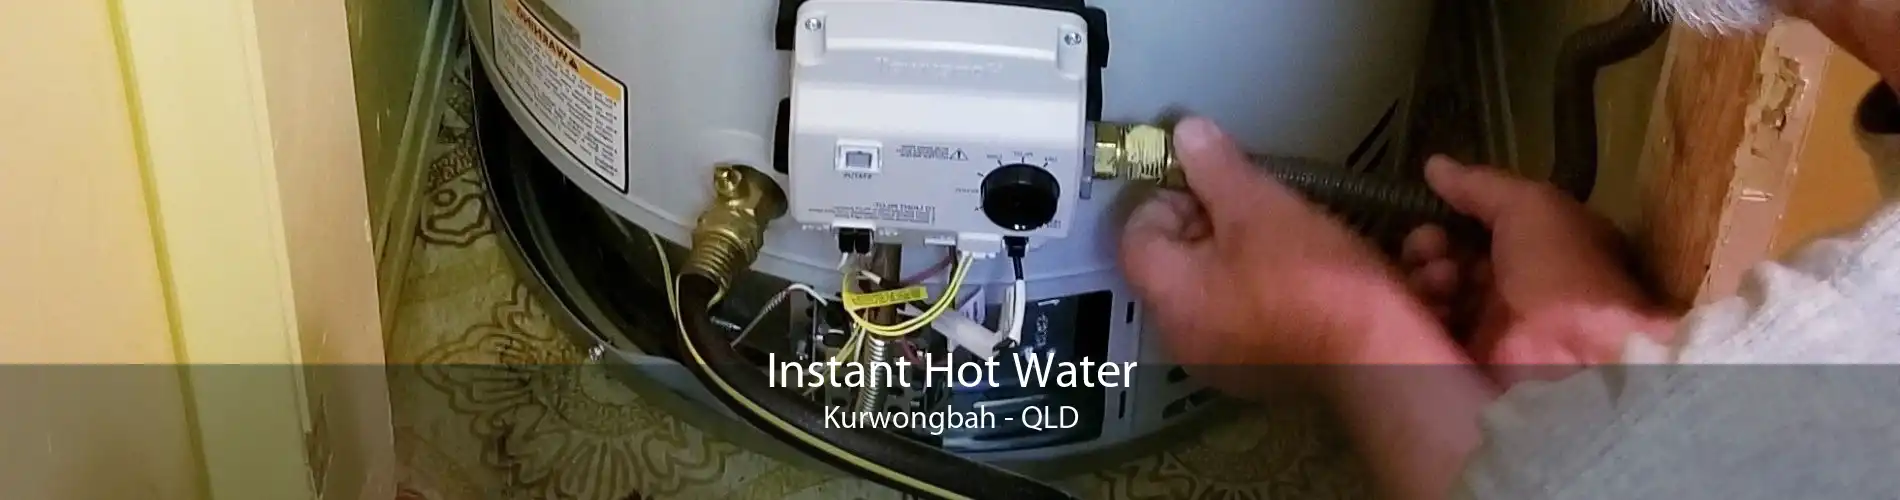 Instant Hot Water Kurwongbah - QLD